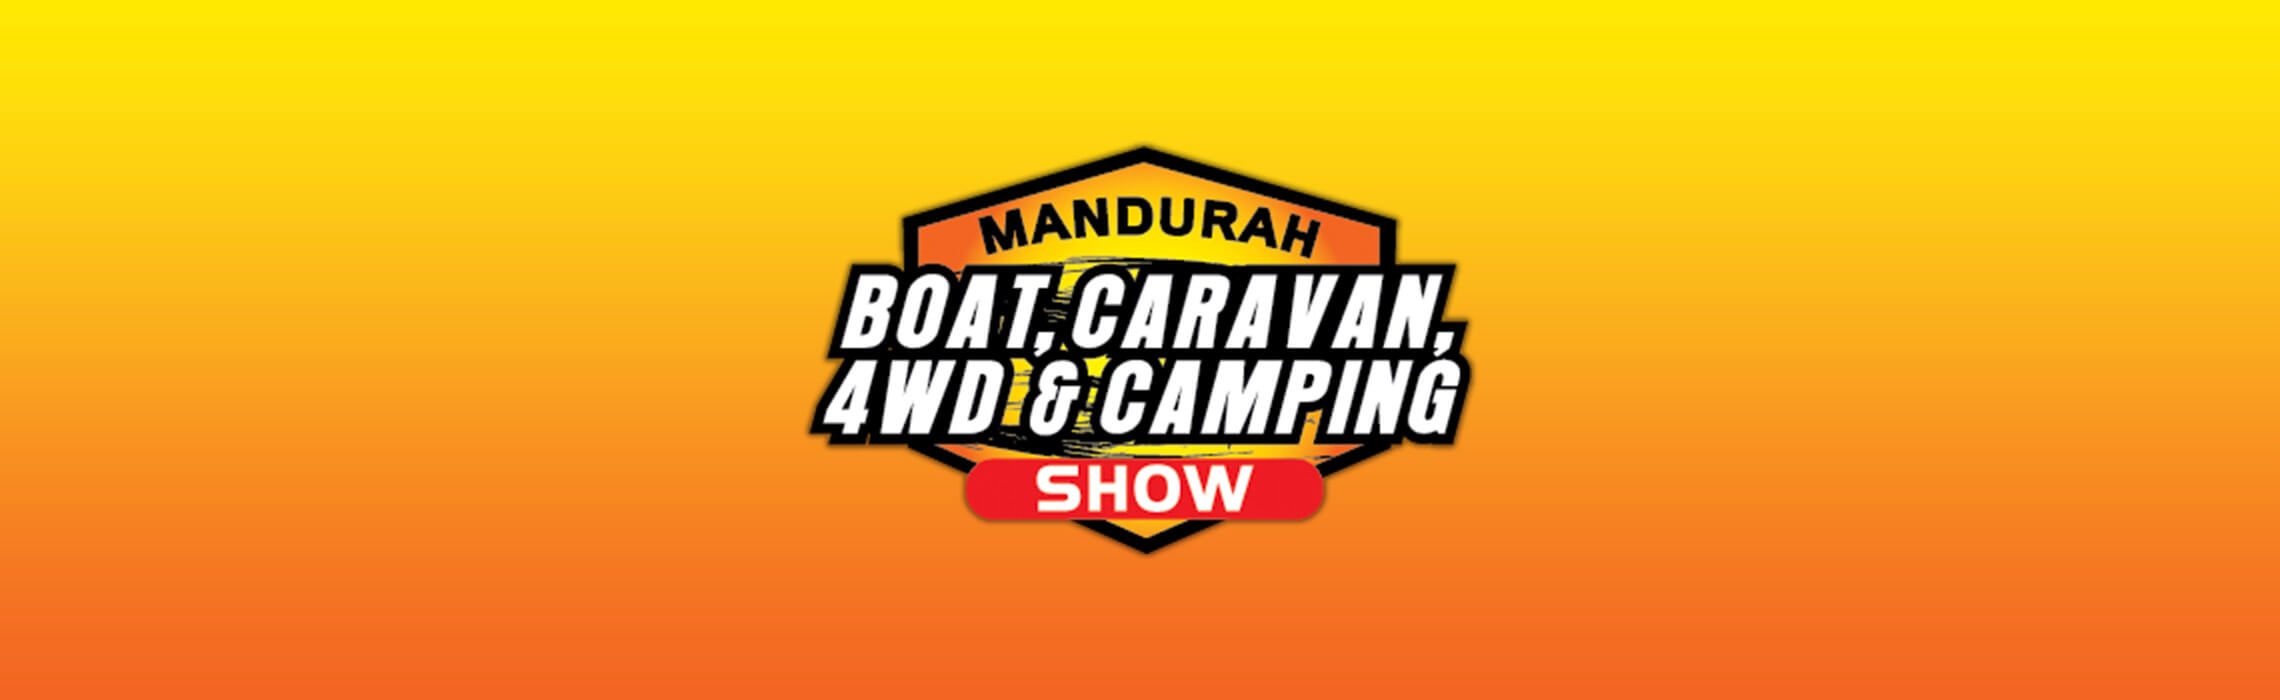 The Mandurah Boat, 4WD, Caravan and Camping Show